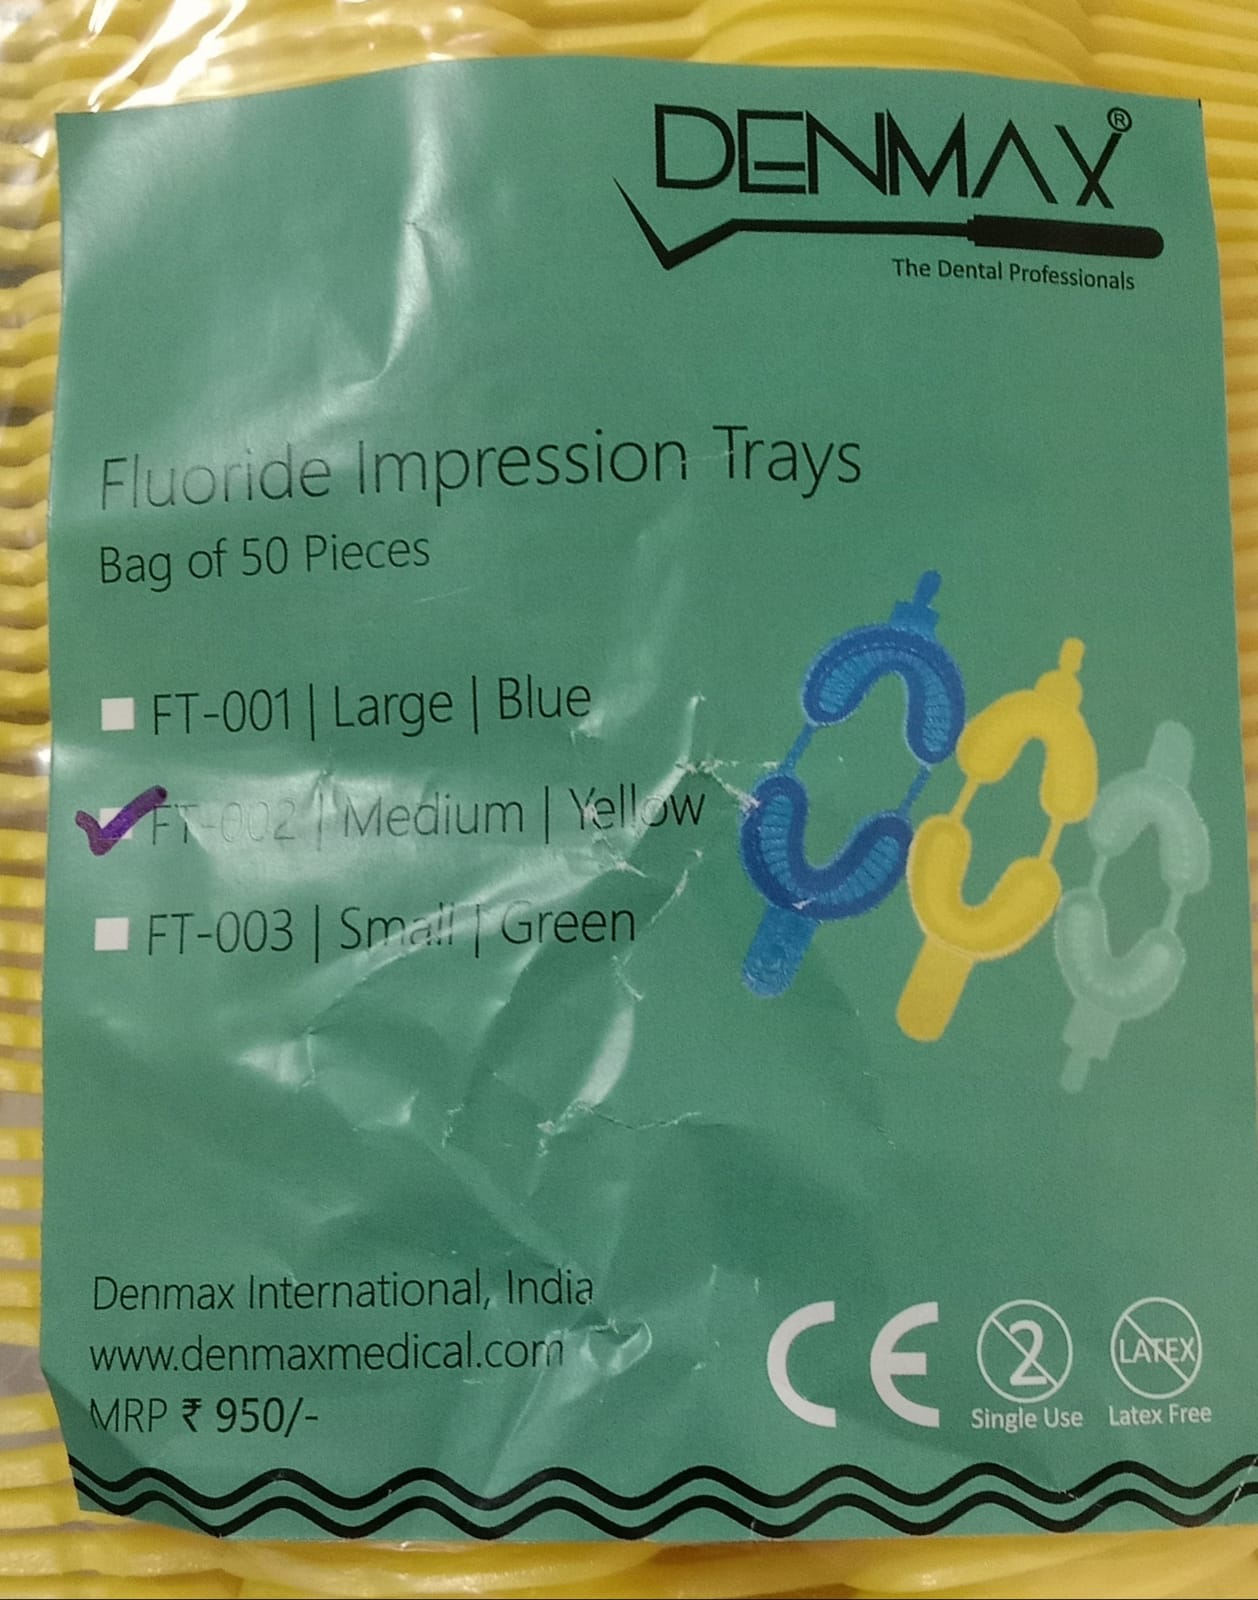 Denmax Fluoride Impression Trays (50 Pieces)